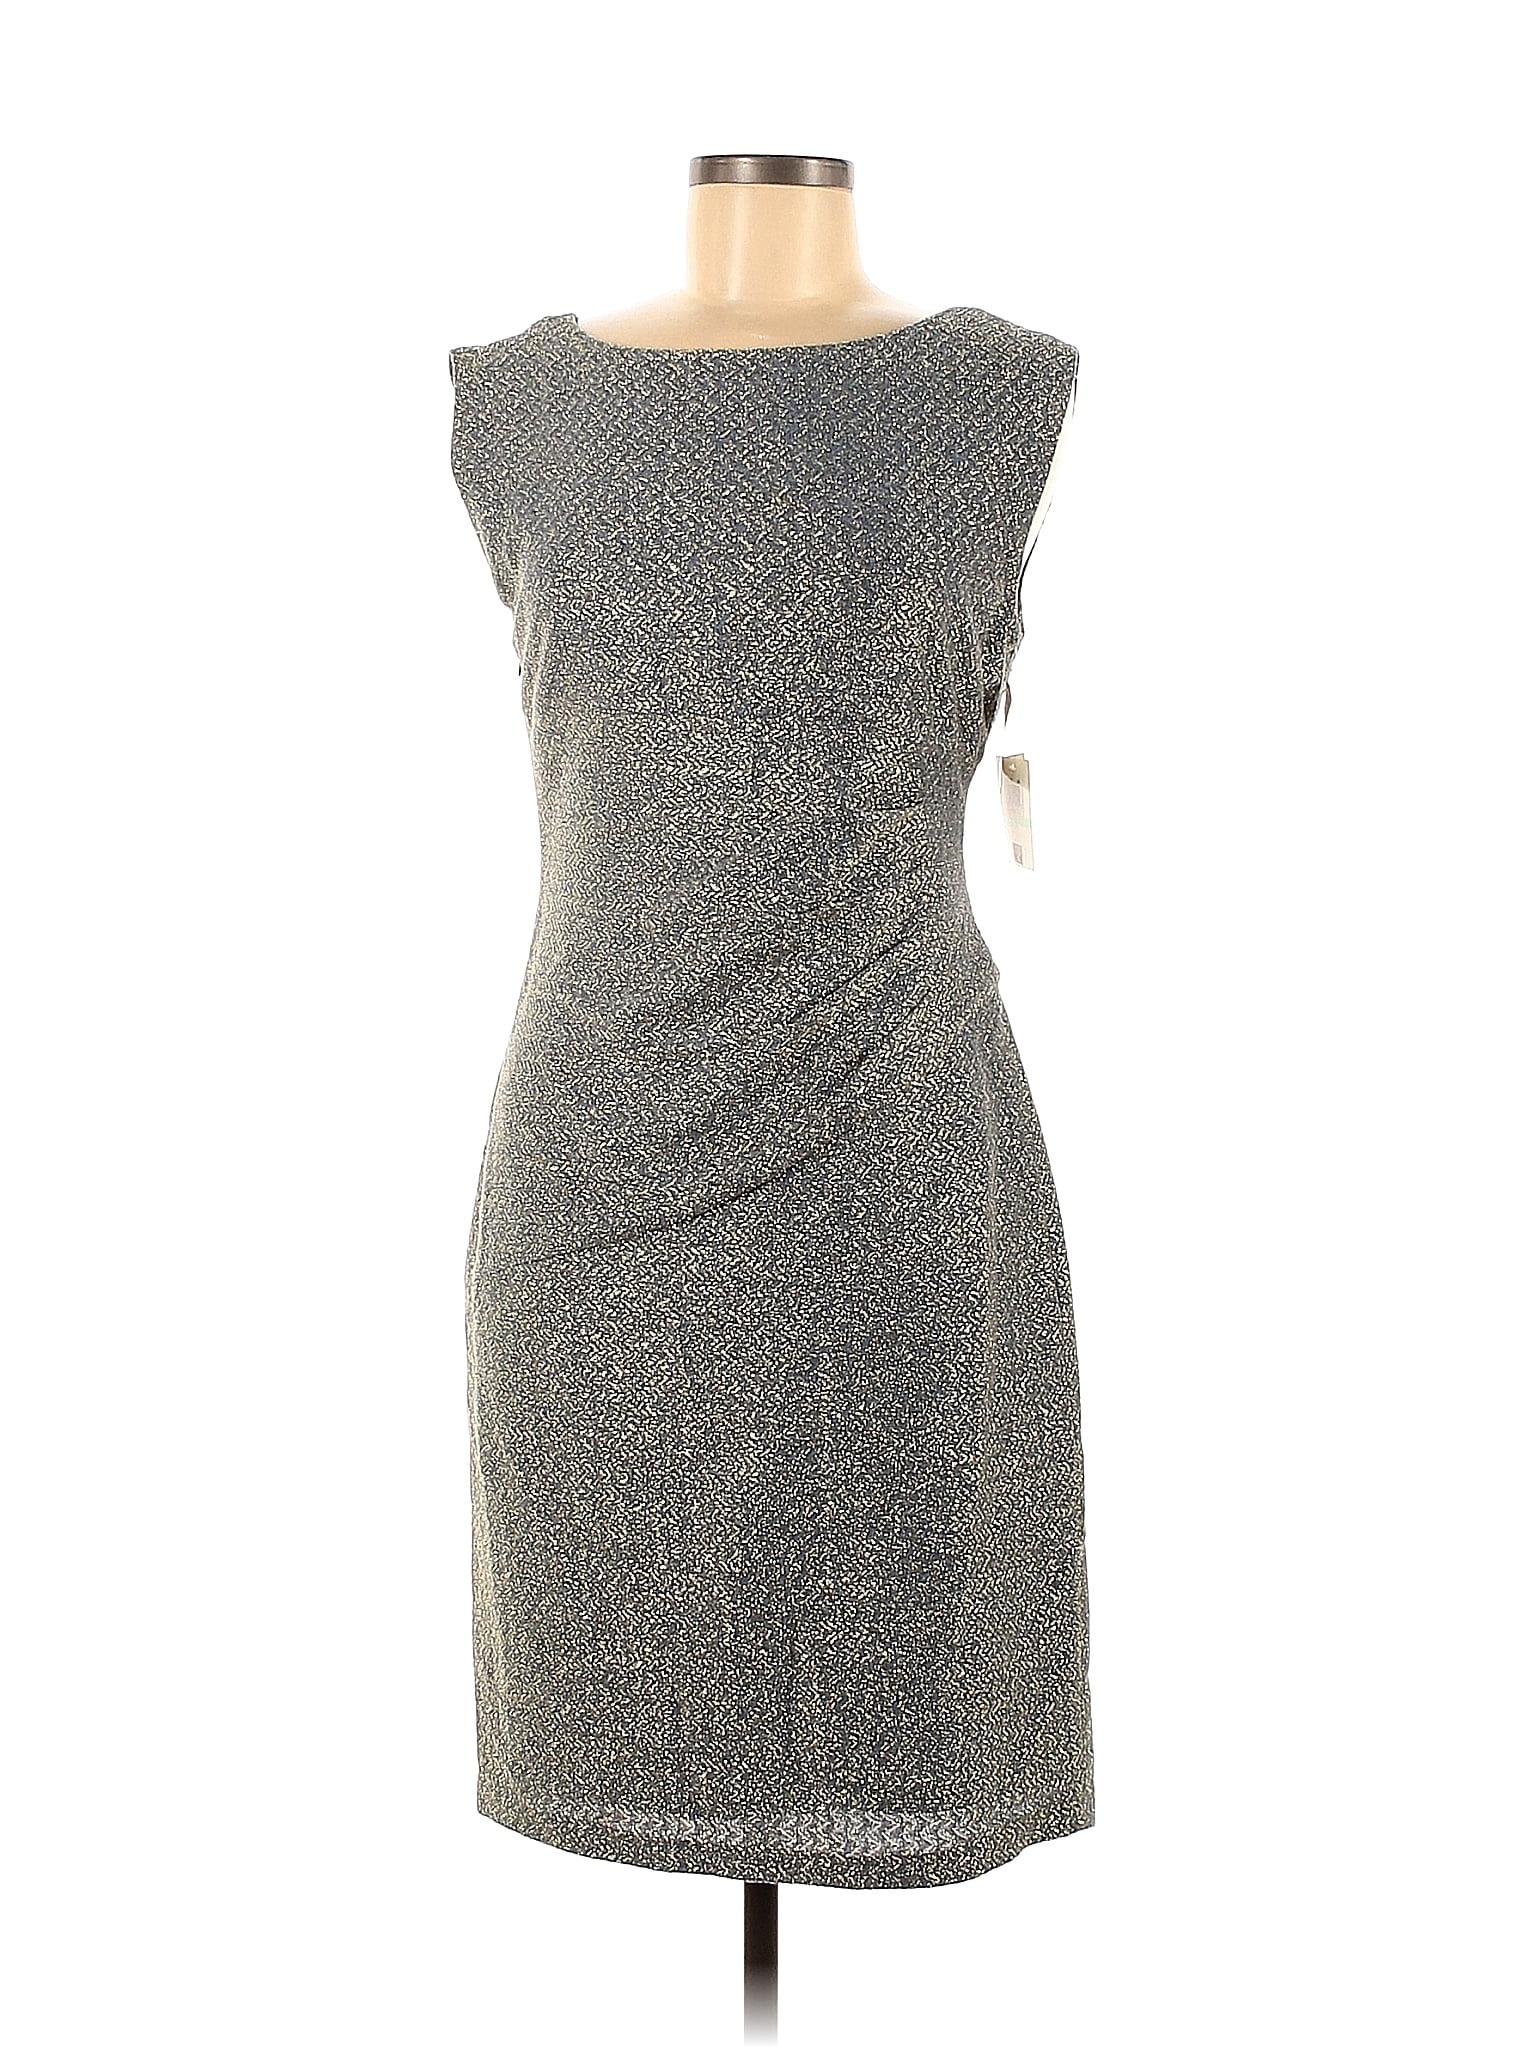 Donna Morgan Leopard Print Gray Casual Dress Size 8 - 25% off | thredUP